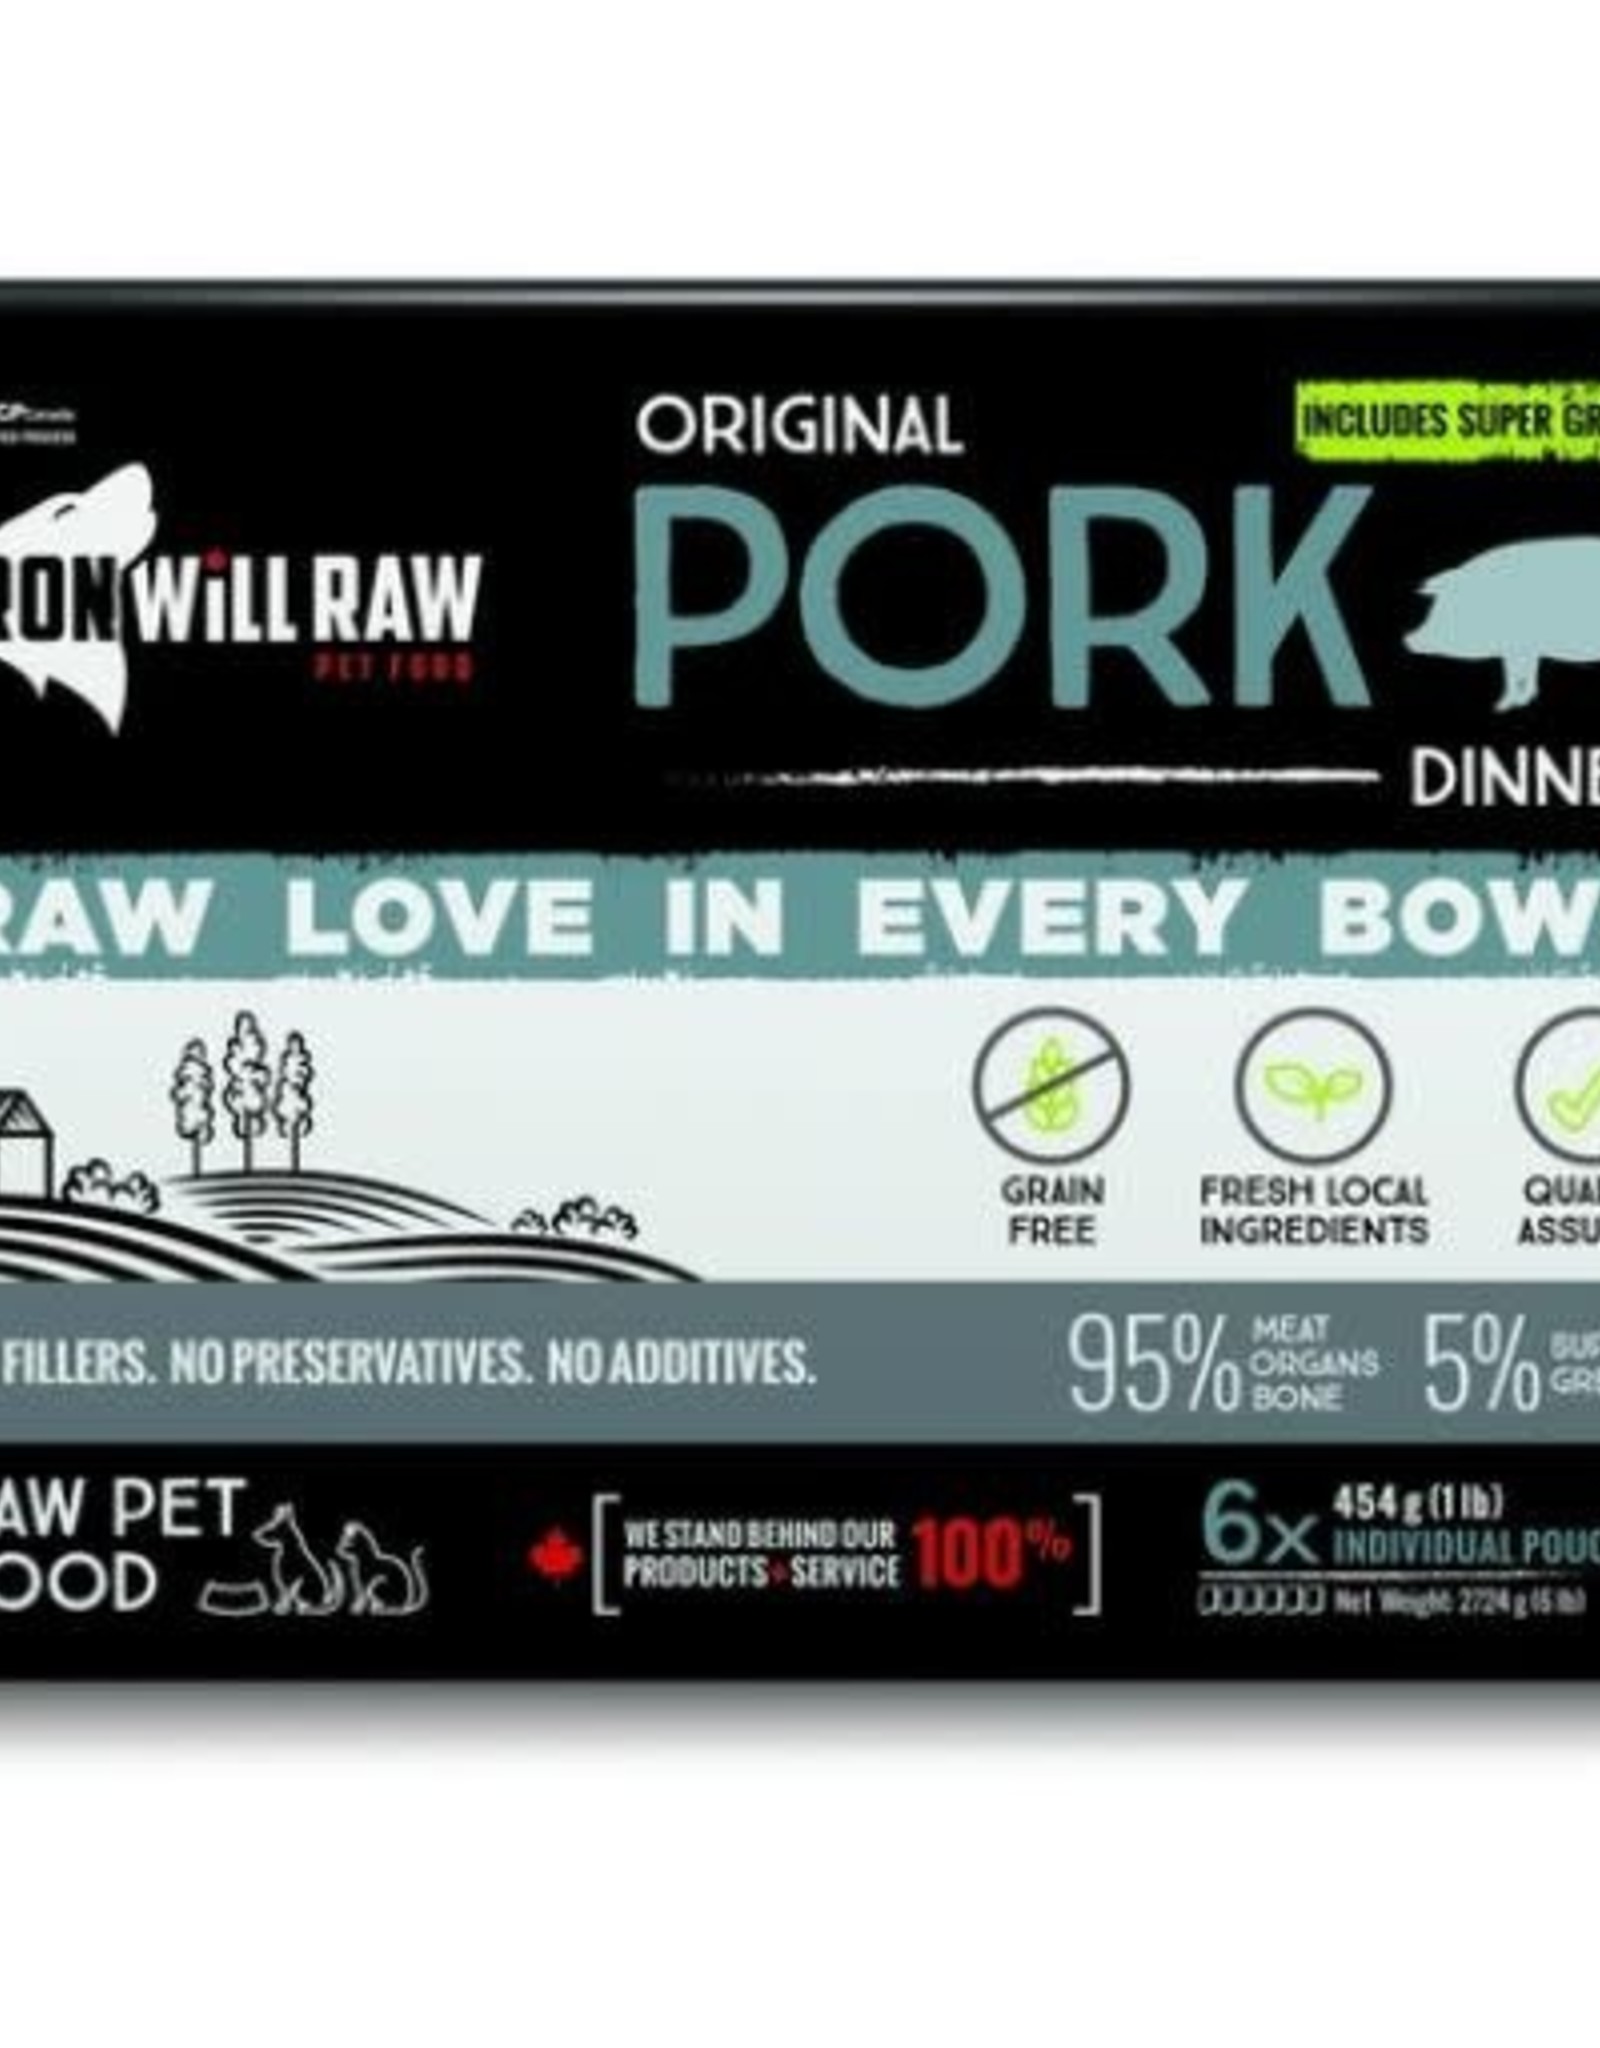 Iron Will Raw Iron Will Raw Original Pork Box 6 lbs